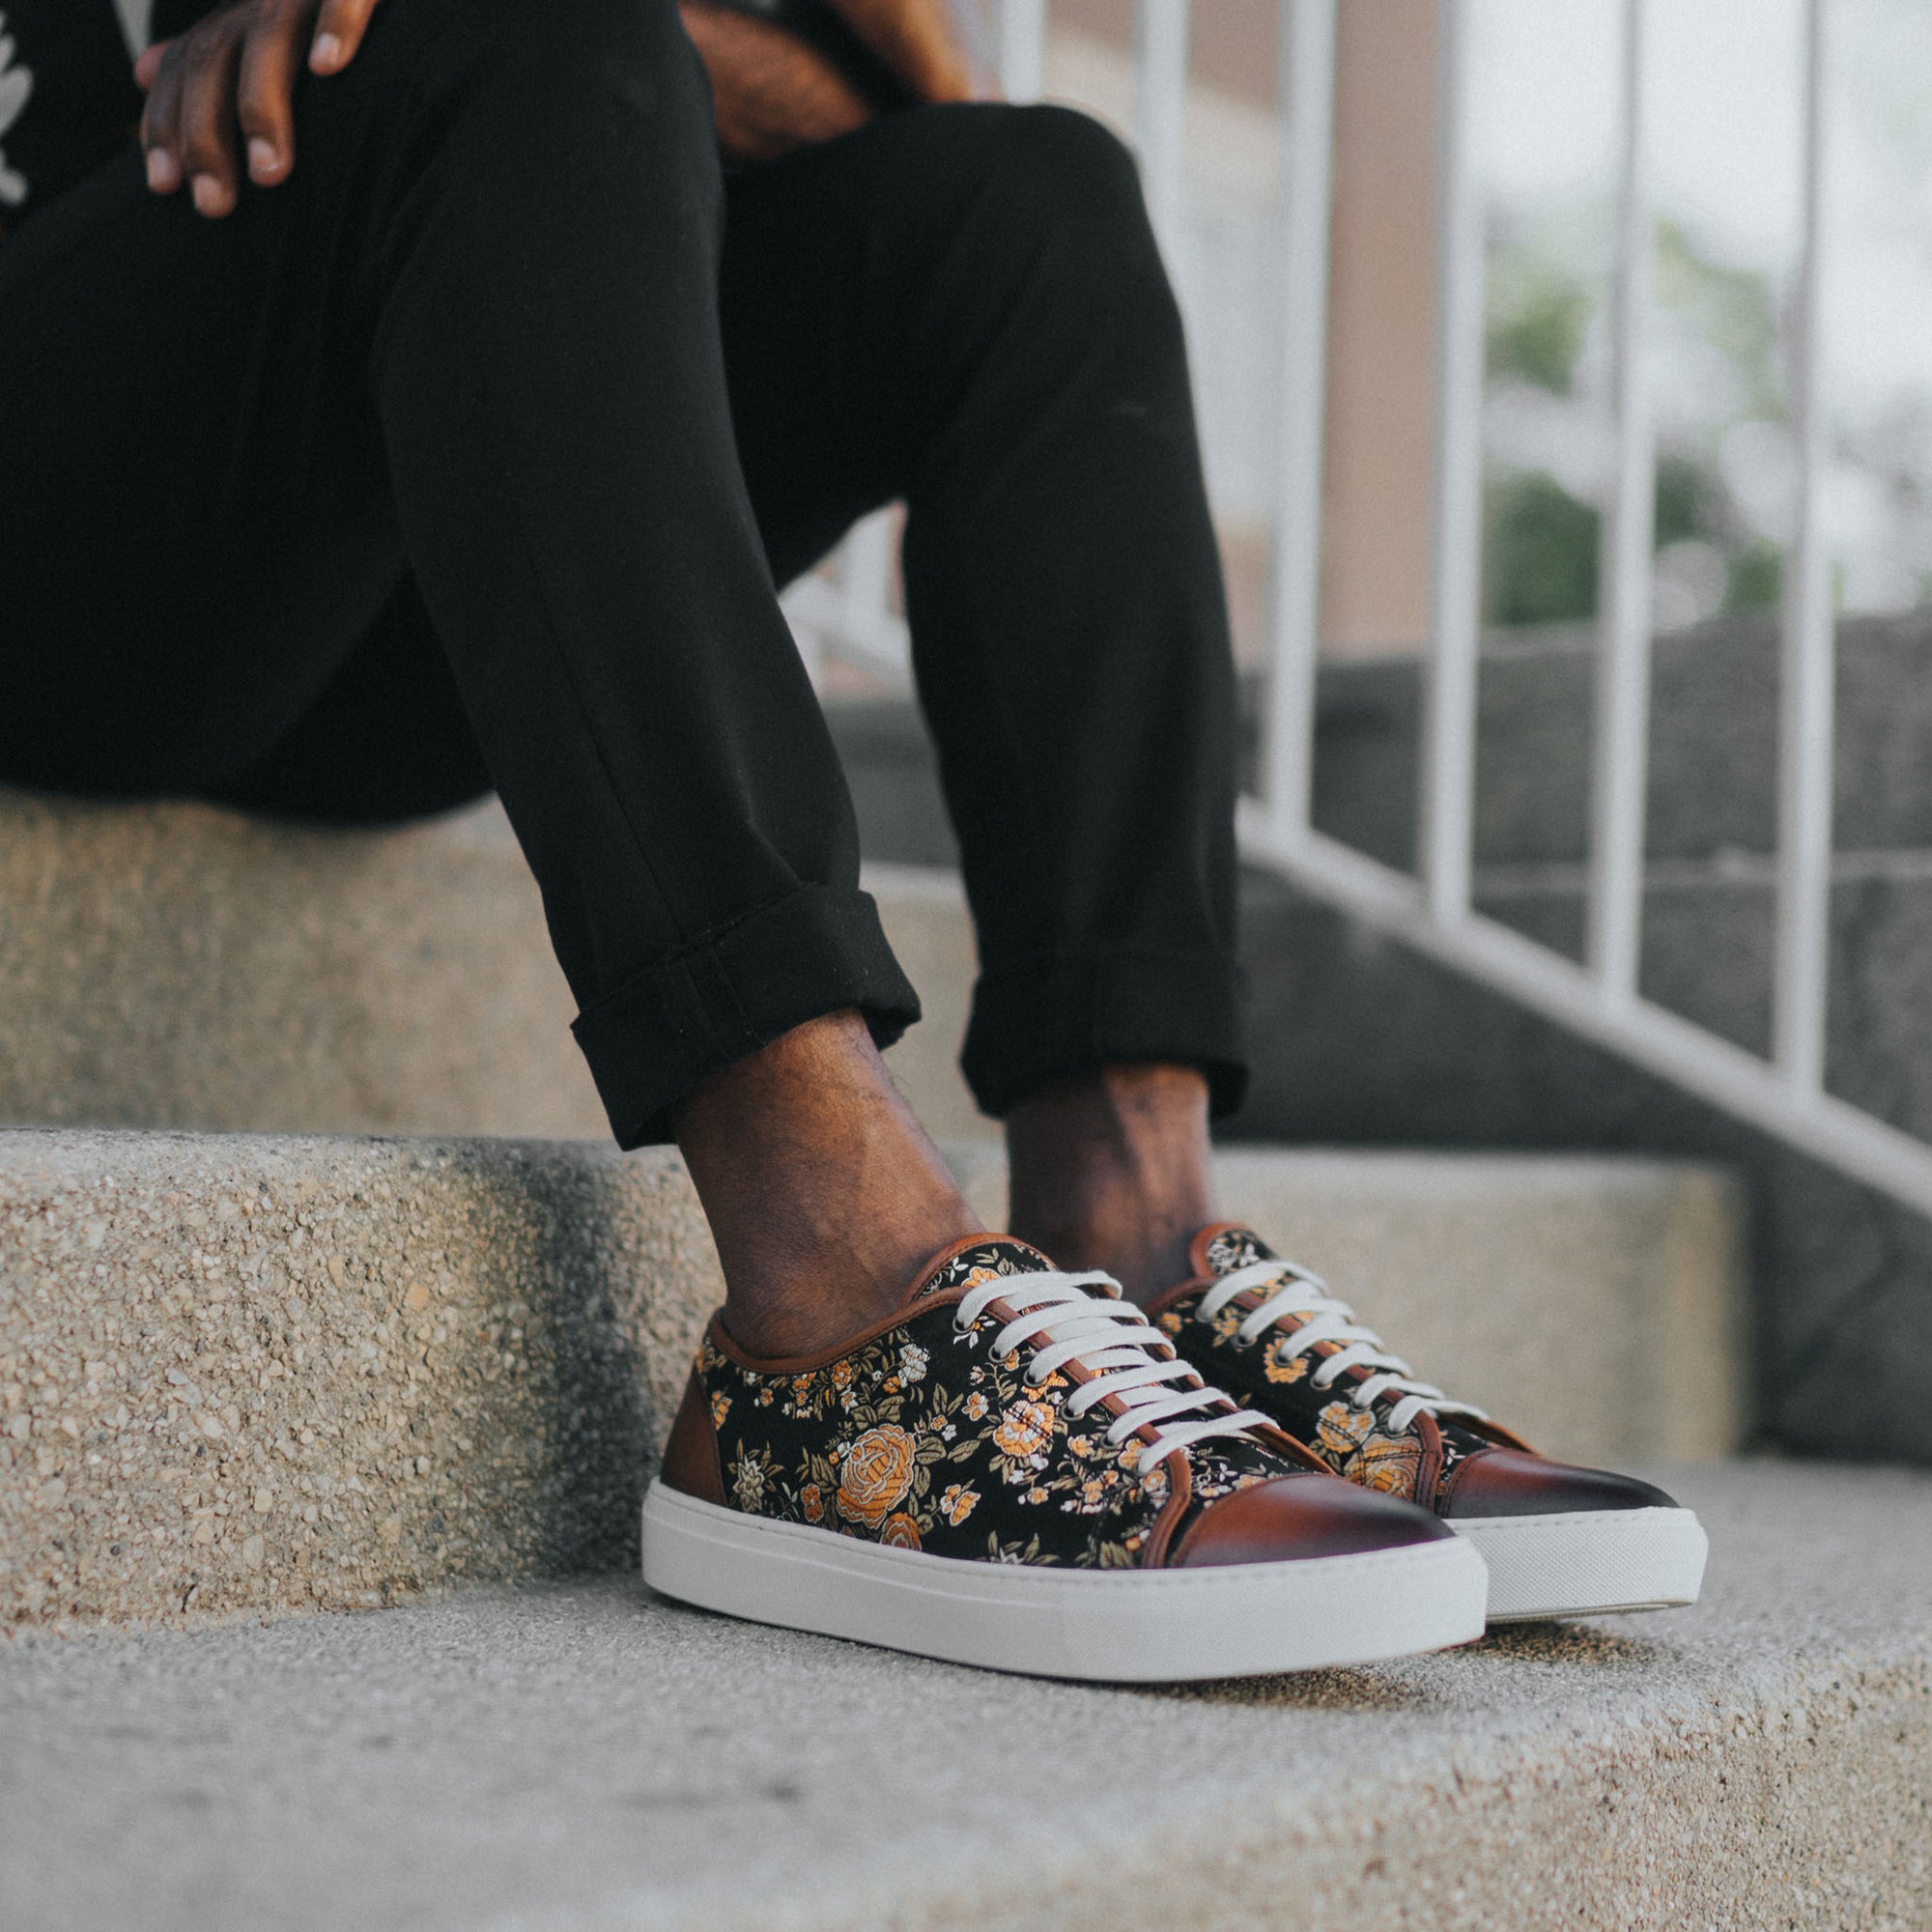 Jack Sneaker in Eden on Model sitting on concrete steps wearing black rolled jeans